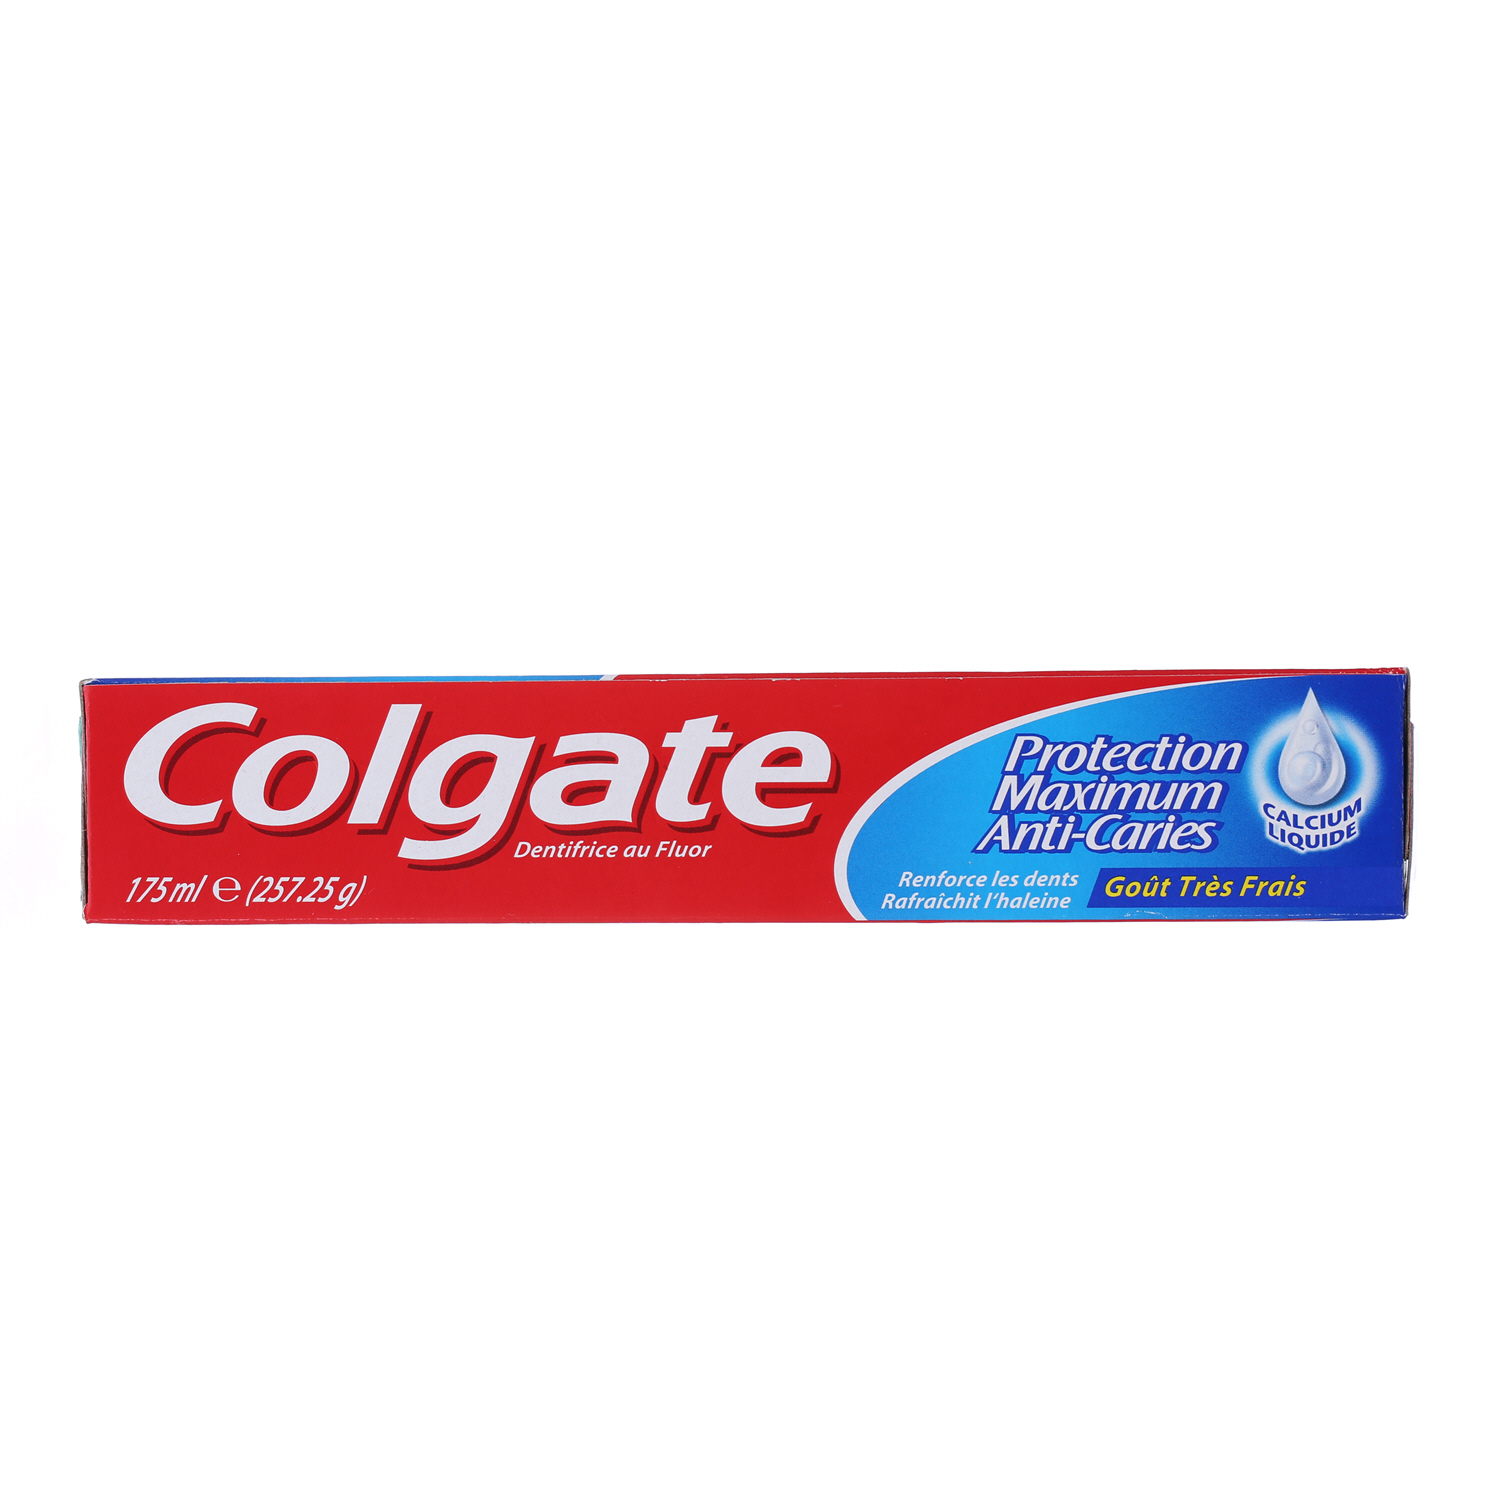 Colgate Regular Toothpaste 175ml